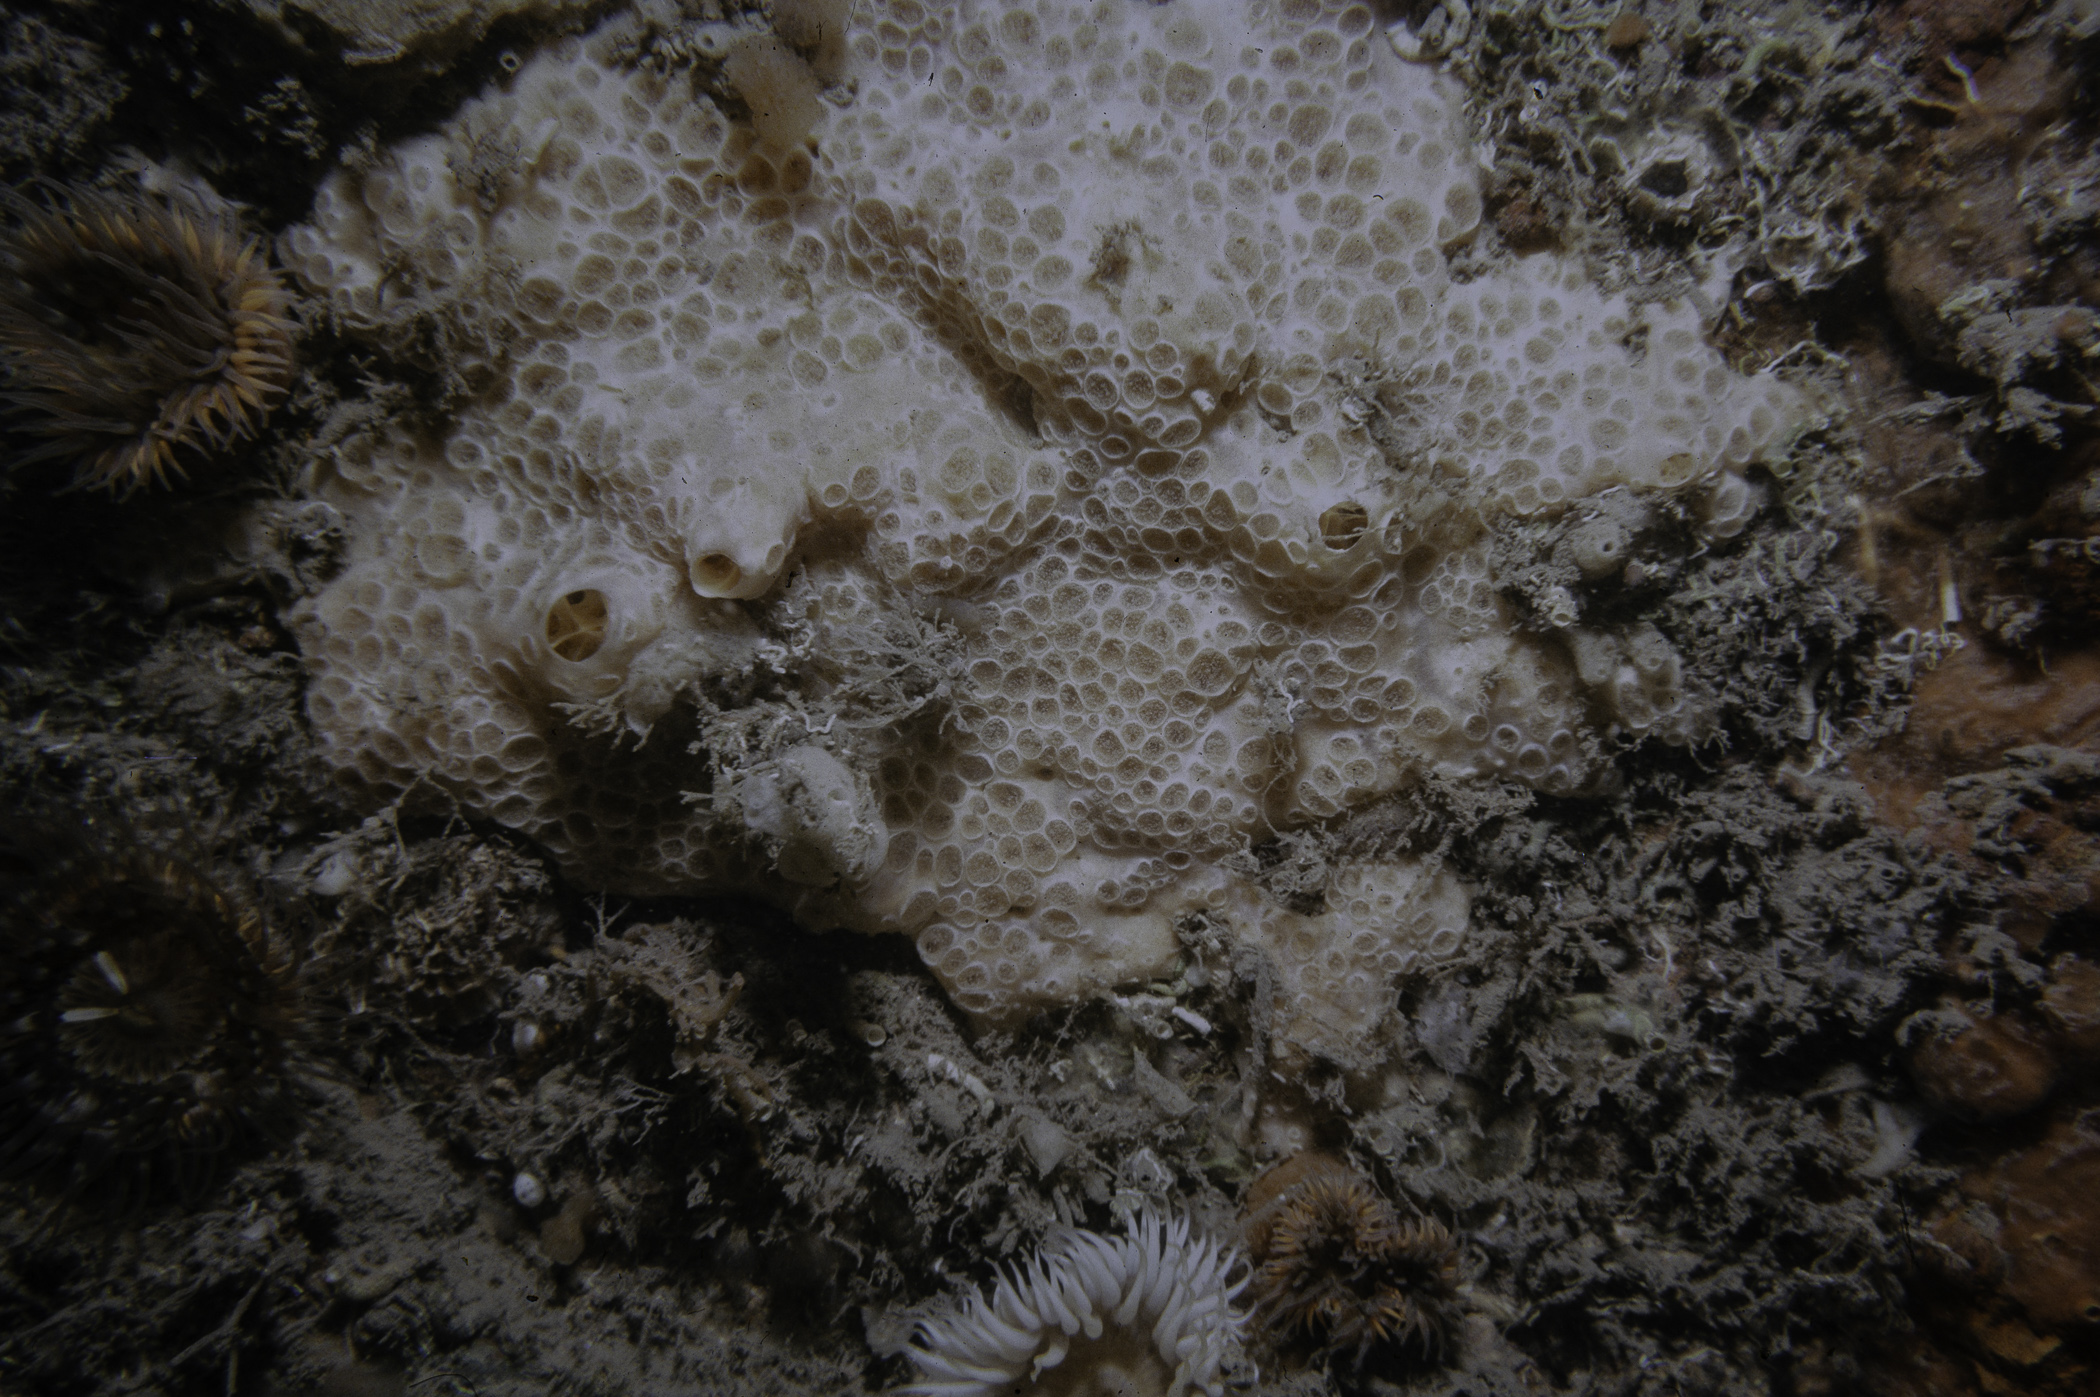 Hemimycale columella, Cylista elegans. Site: Lee's Wreck, Ballyhenry Bay, Strangford Lough. 